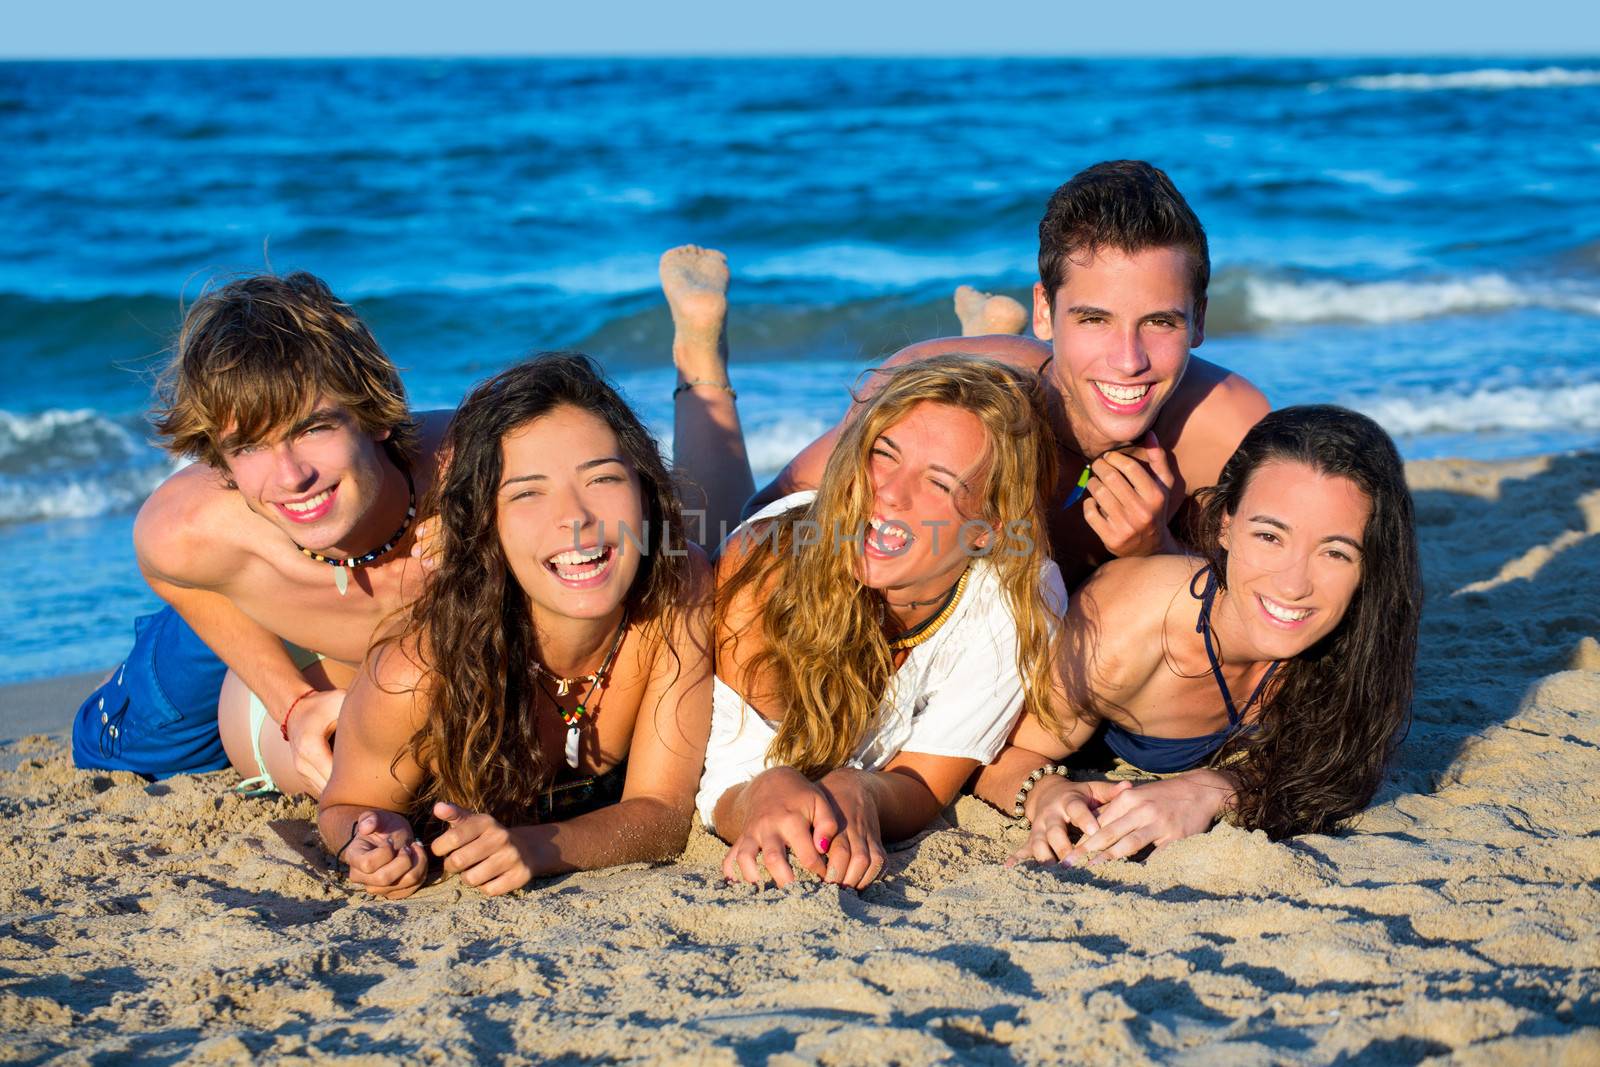 Boys and girls group having fun on the beach by lunamarina